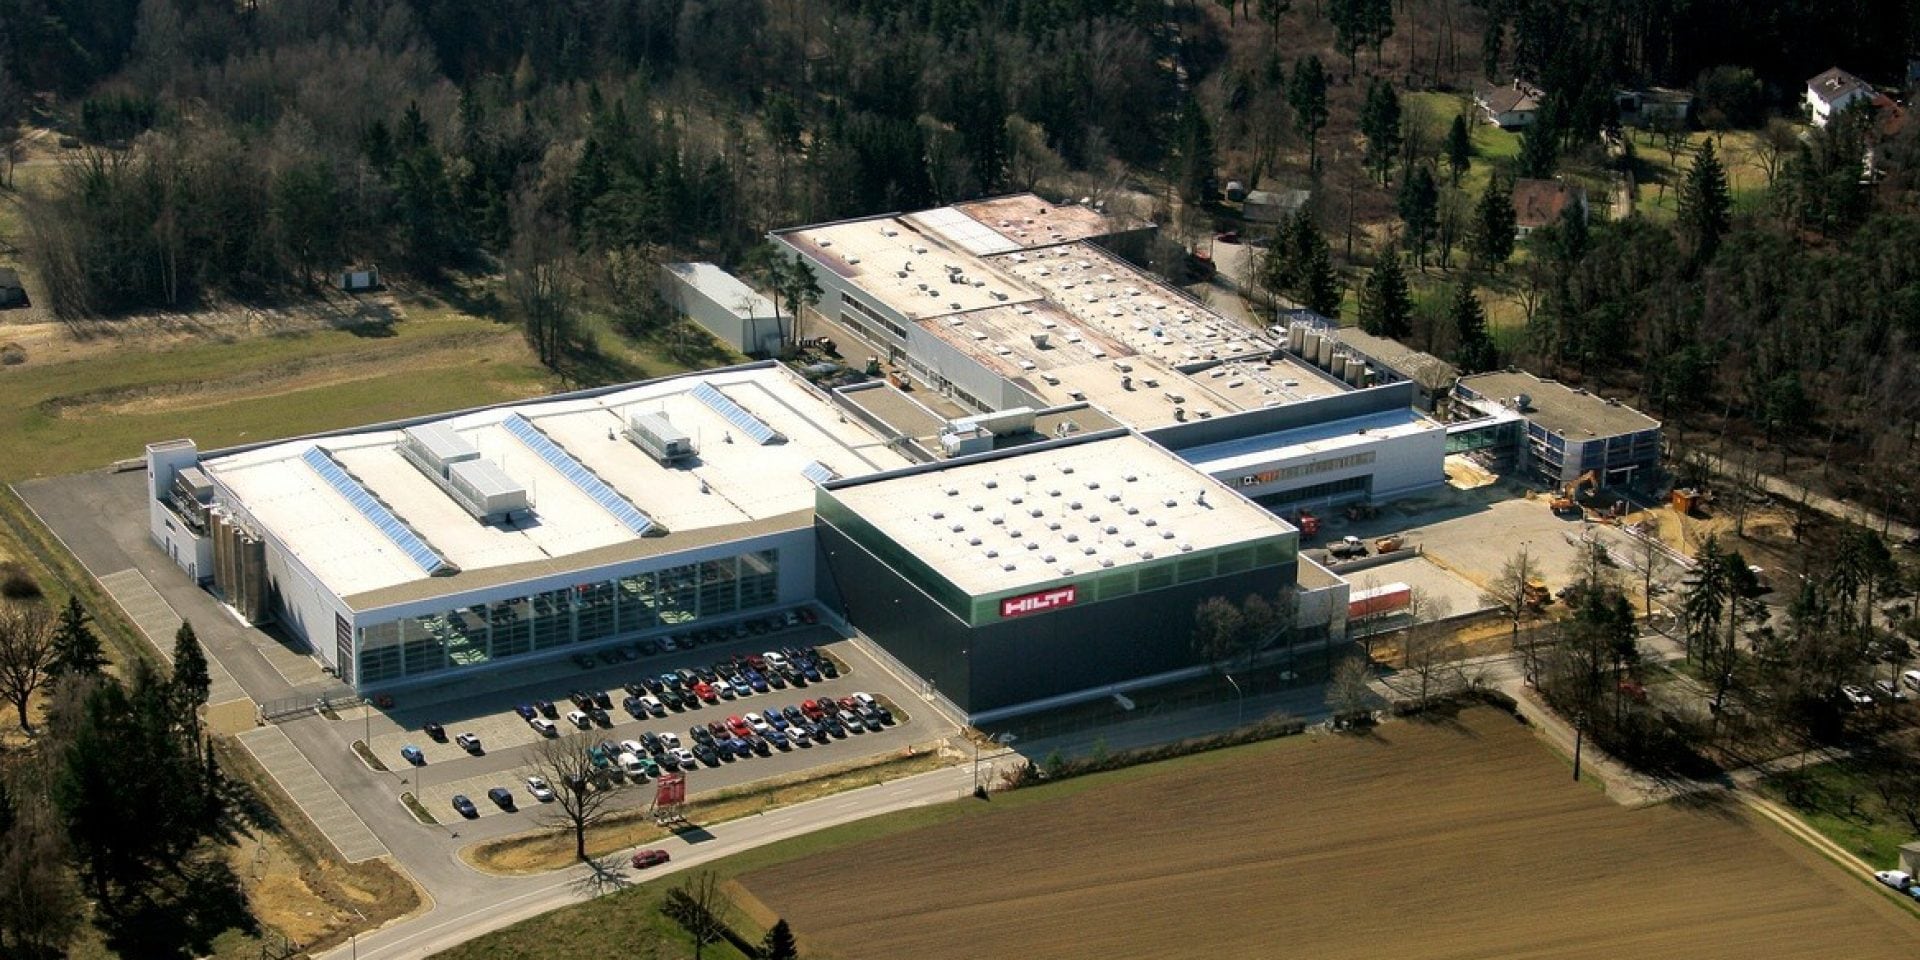 Hilti-fabriek in Strass, Duitsland